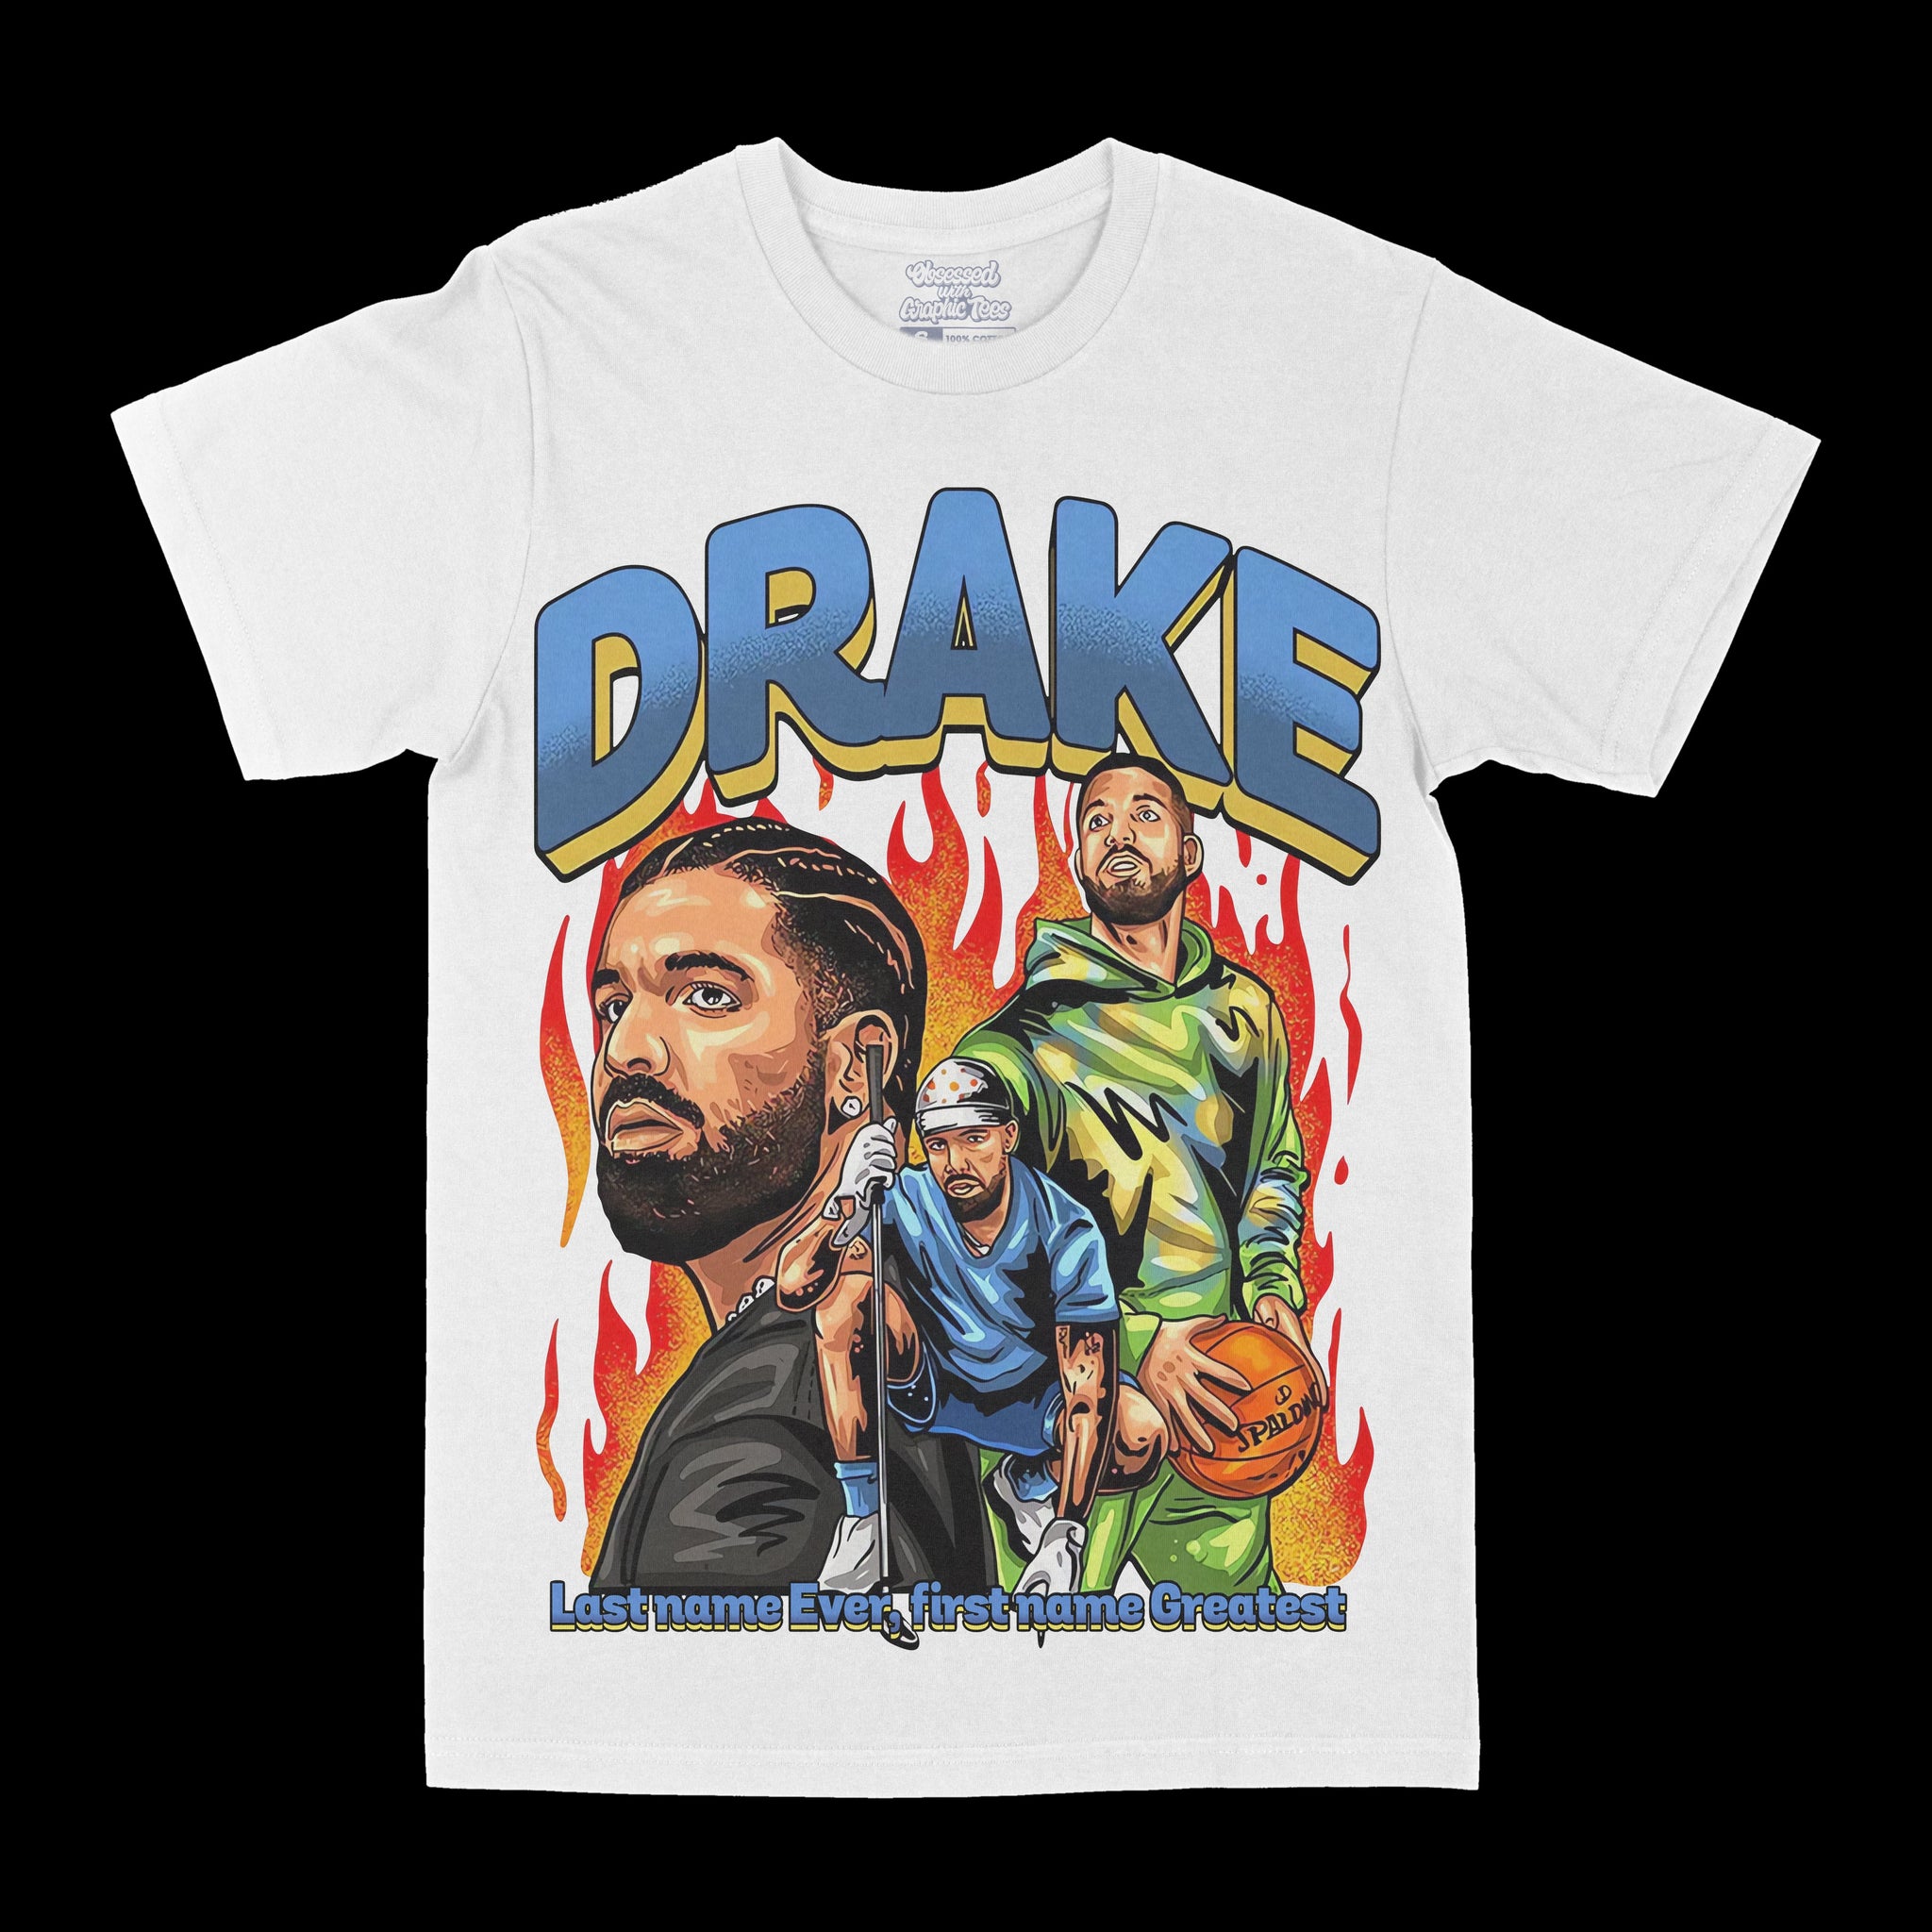 Drake "Greatest" Graphic Tee